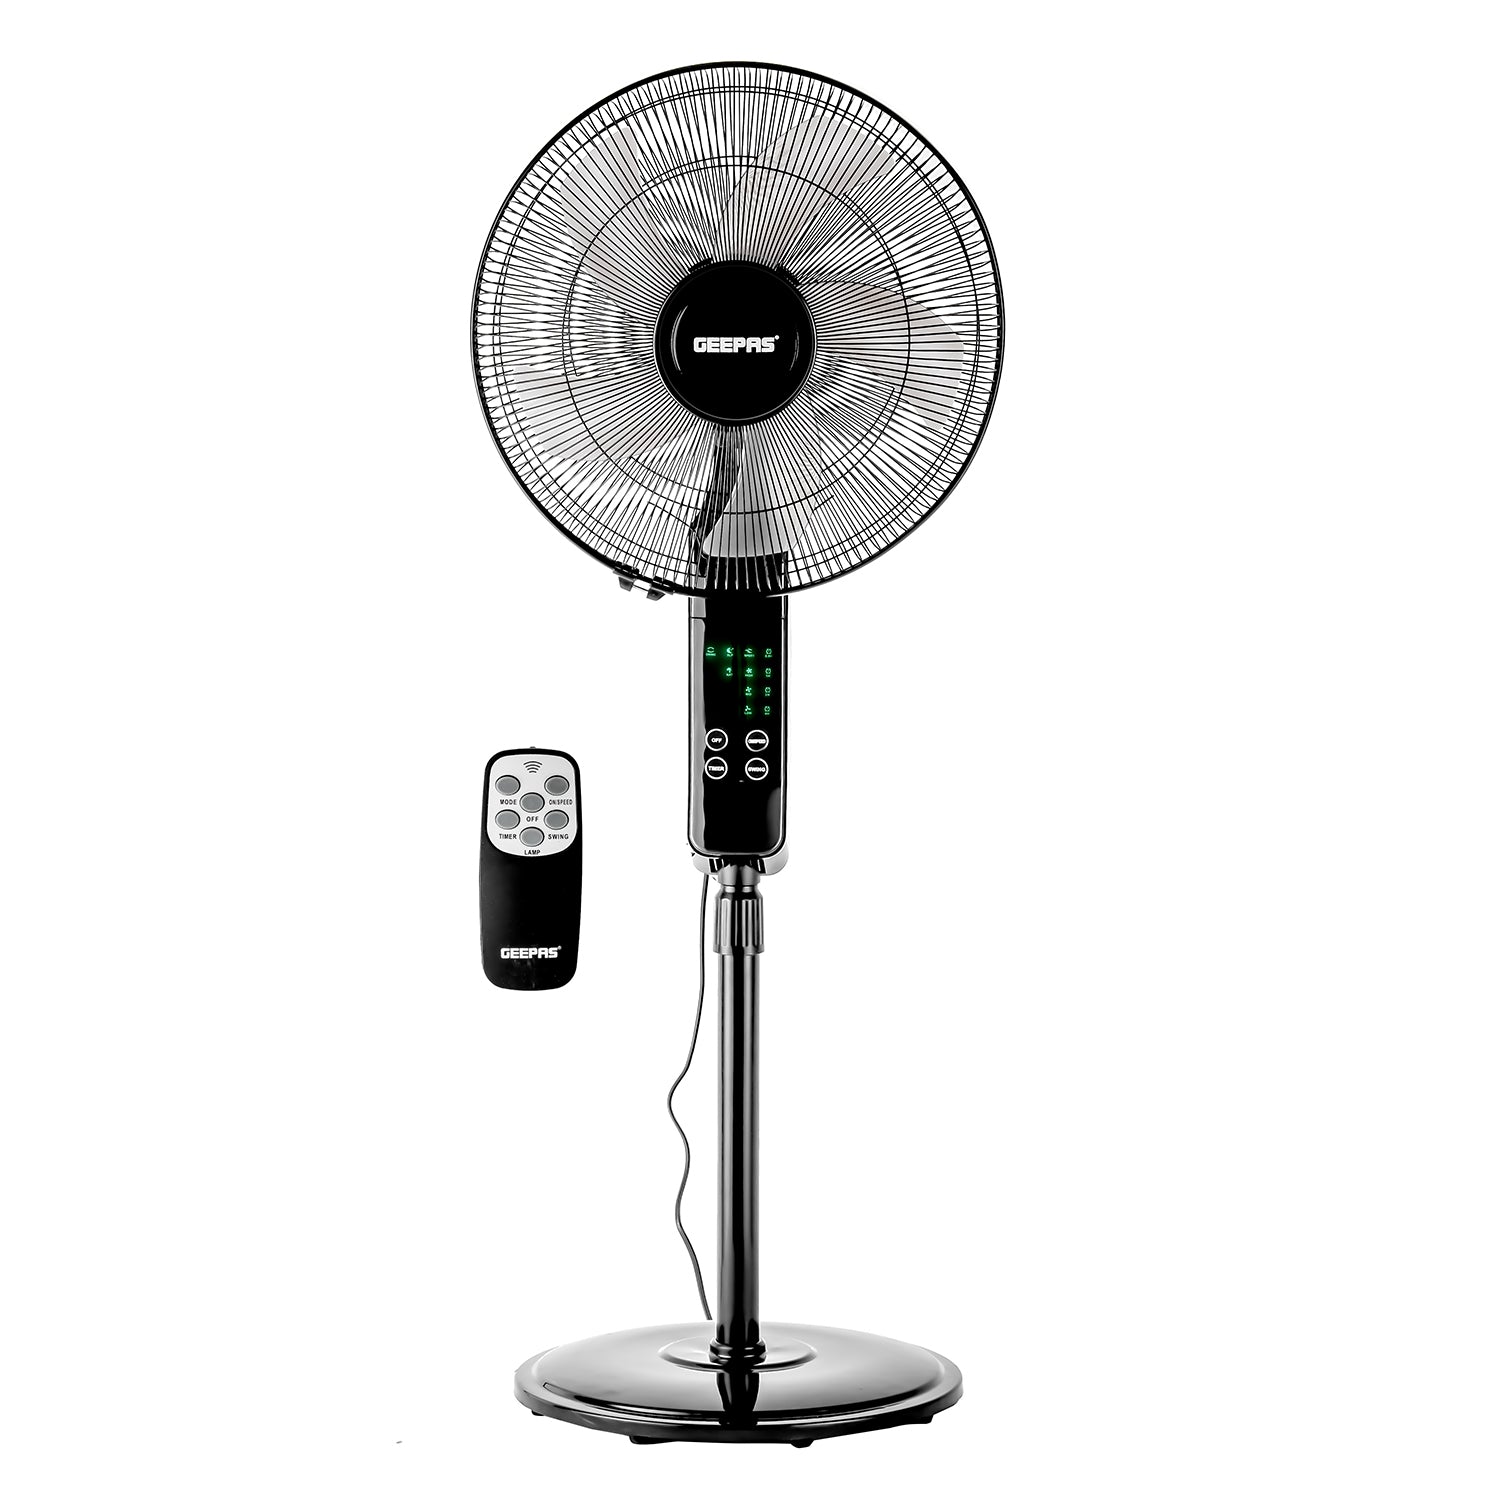 16" Portable Black Remote Controlled Pedestal Fan